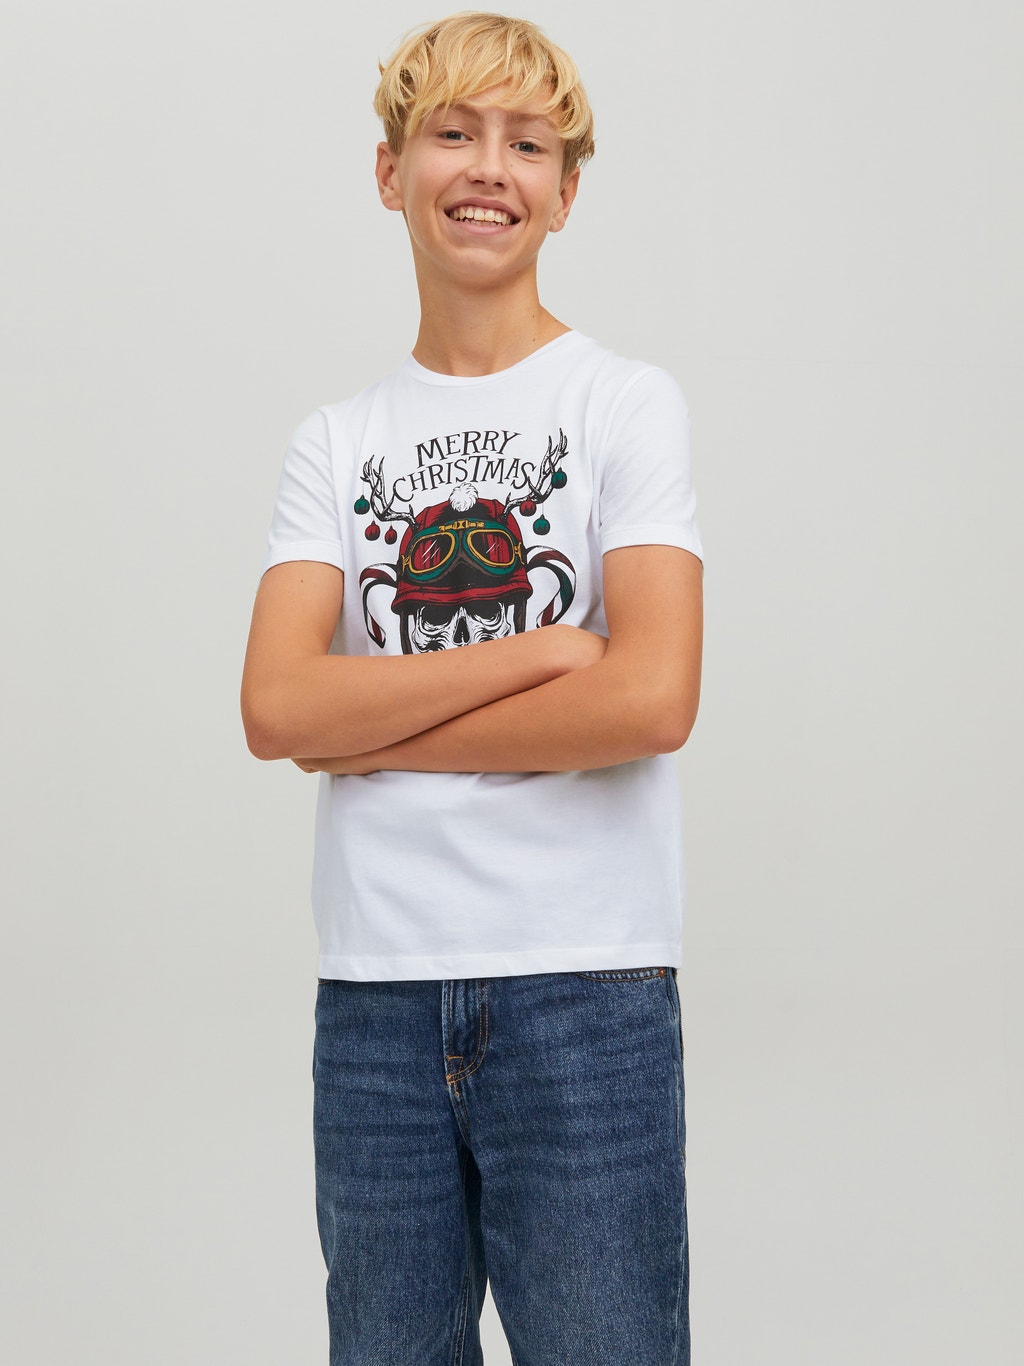 Boys X-mas T-shirt with 60% discount! | Jack & Jones®